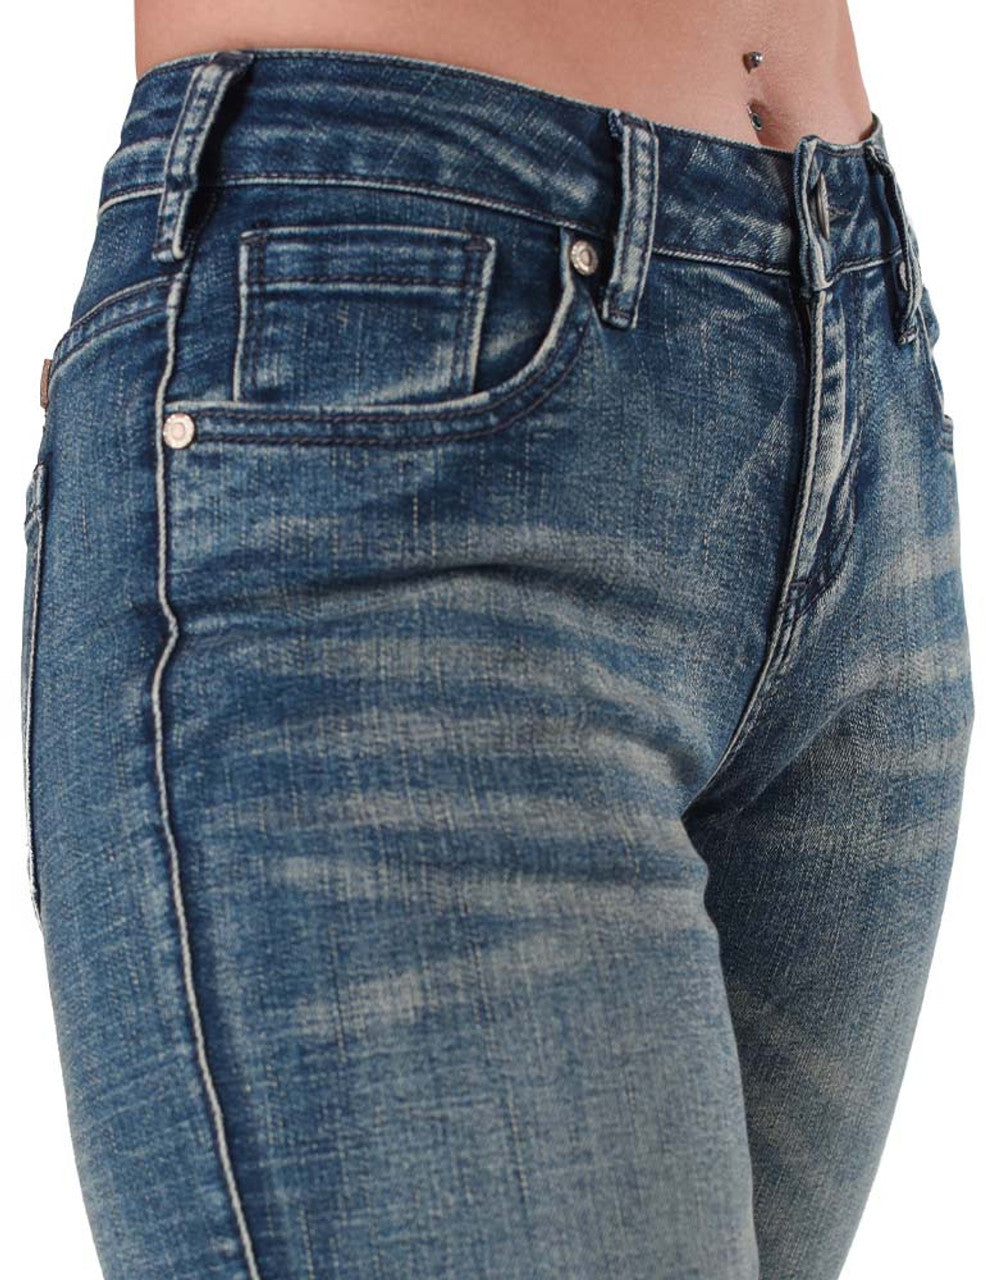 COWGIRL TUFF Women's Medium Trouser